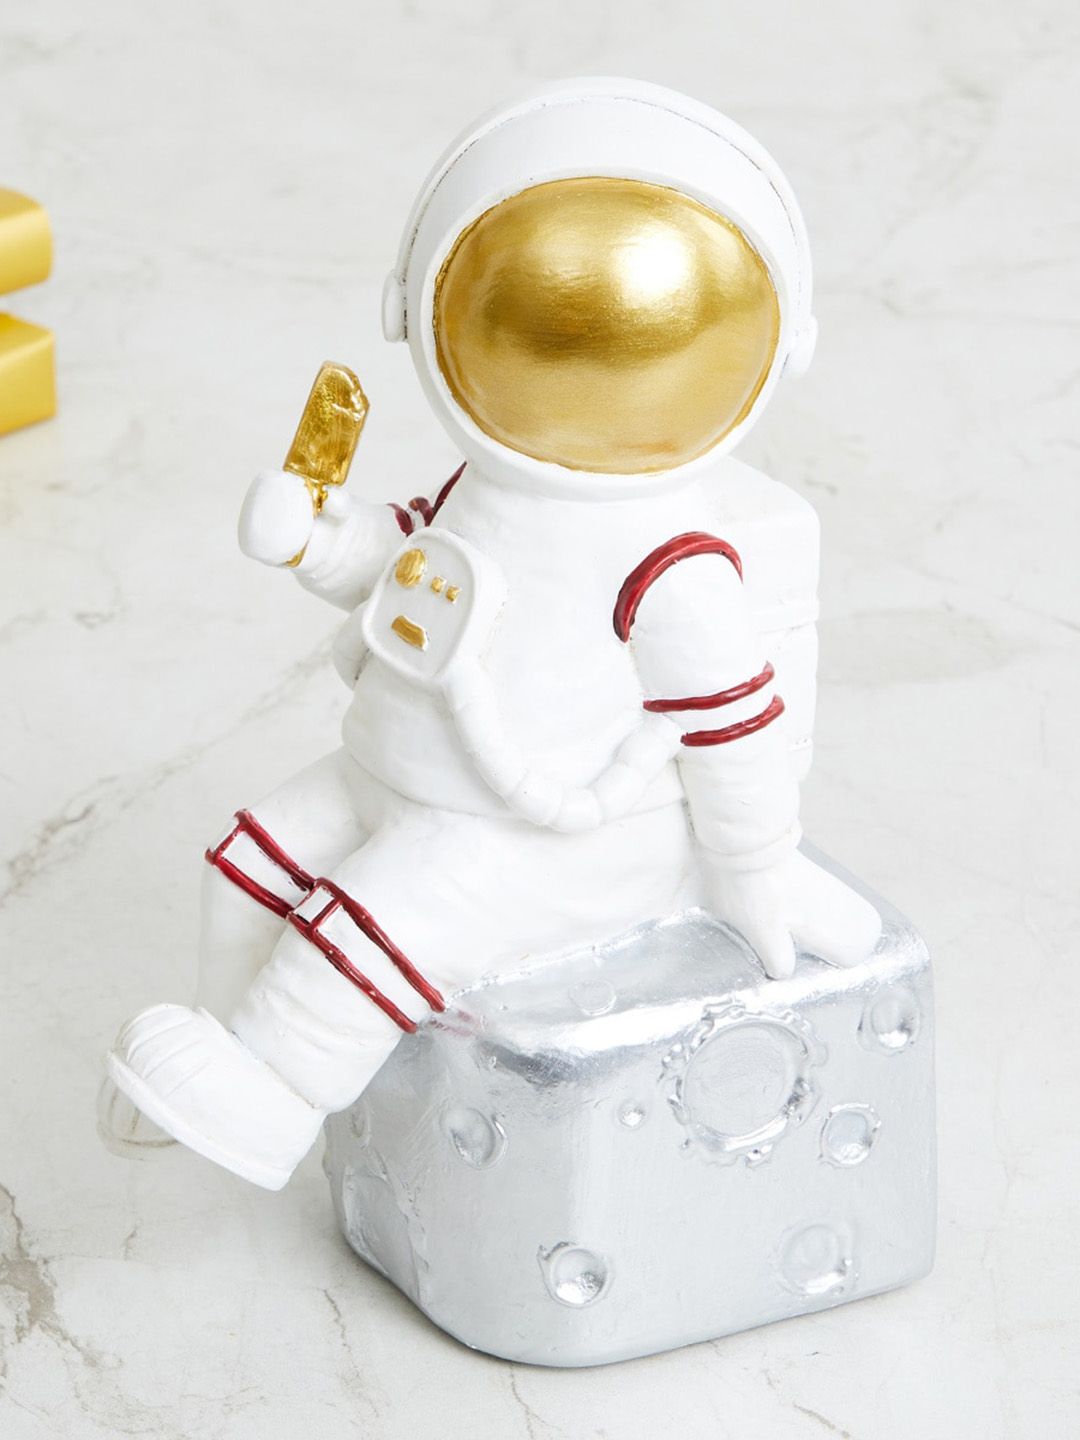 Home Centre Souvenir Polyresin Astronaut Sitting Posture Figurine Price in India